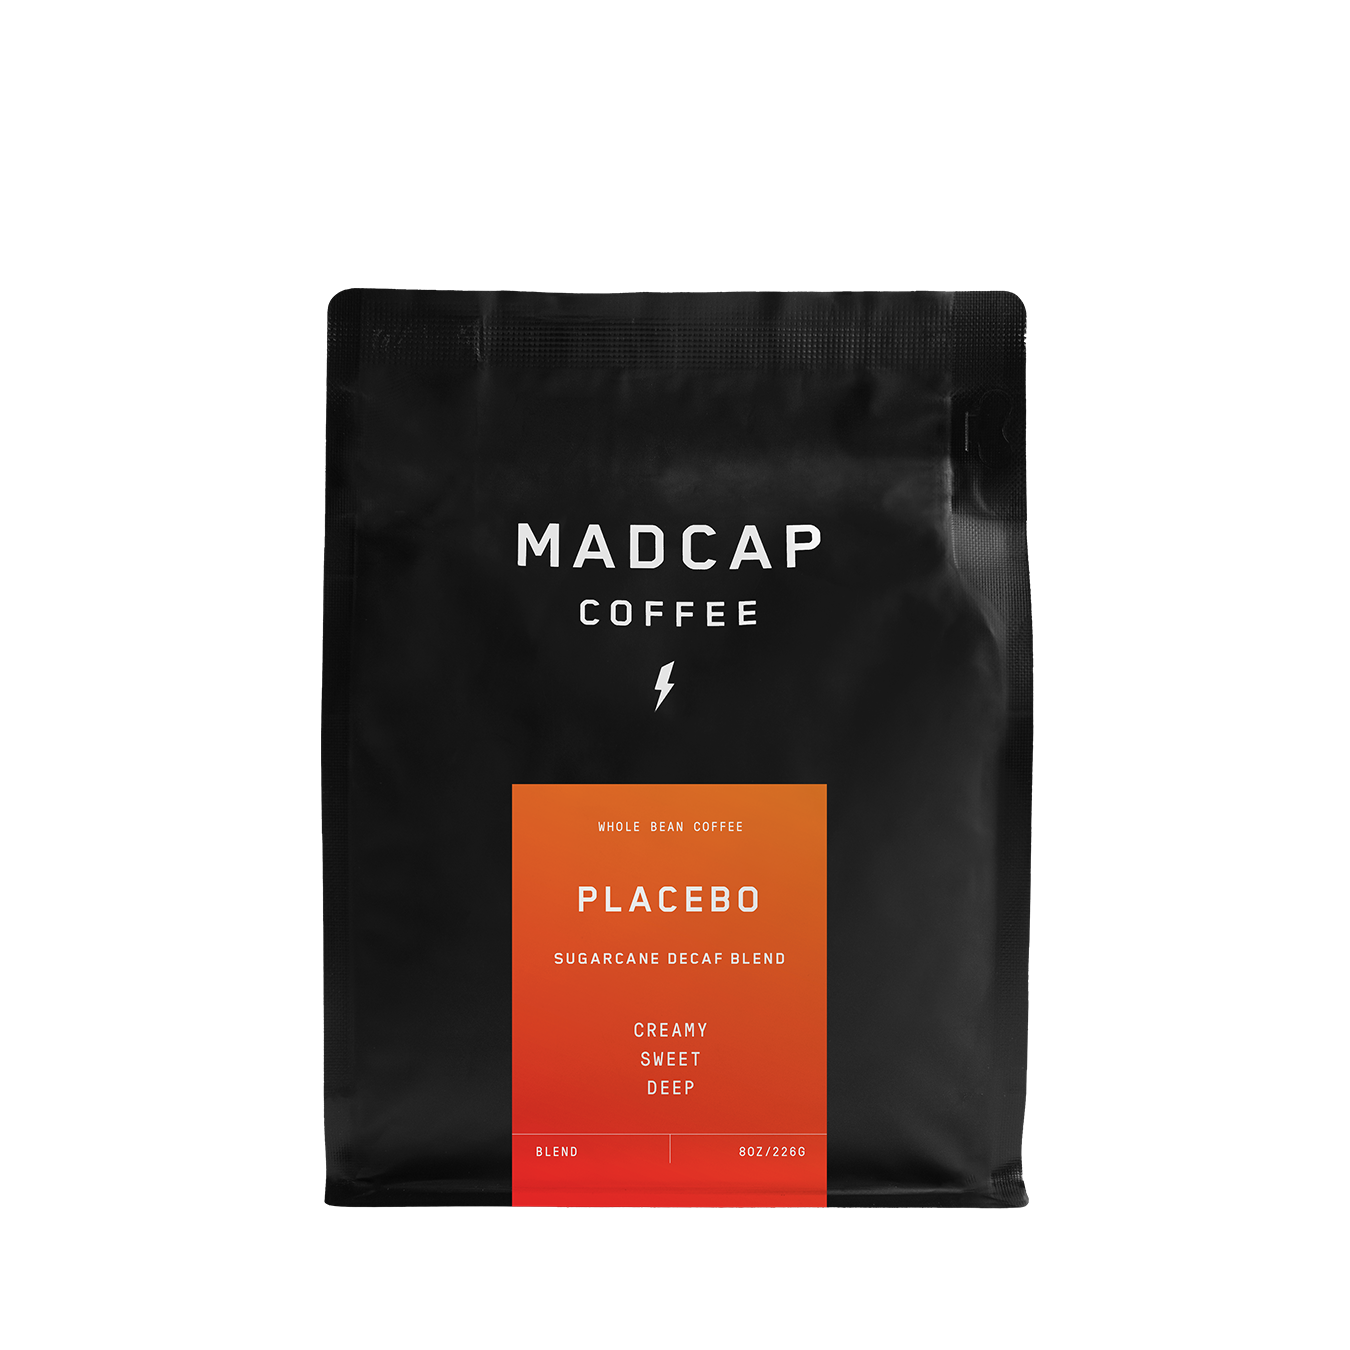 Placebo decaf coffee retail